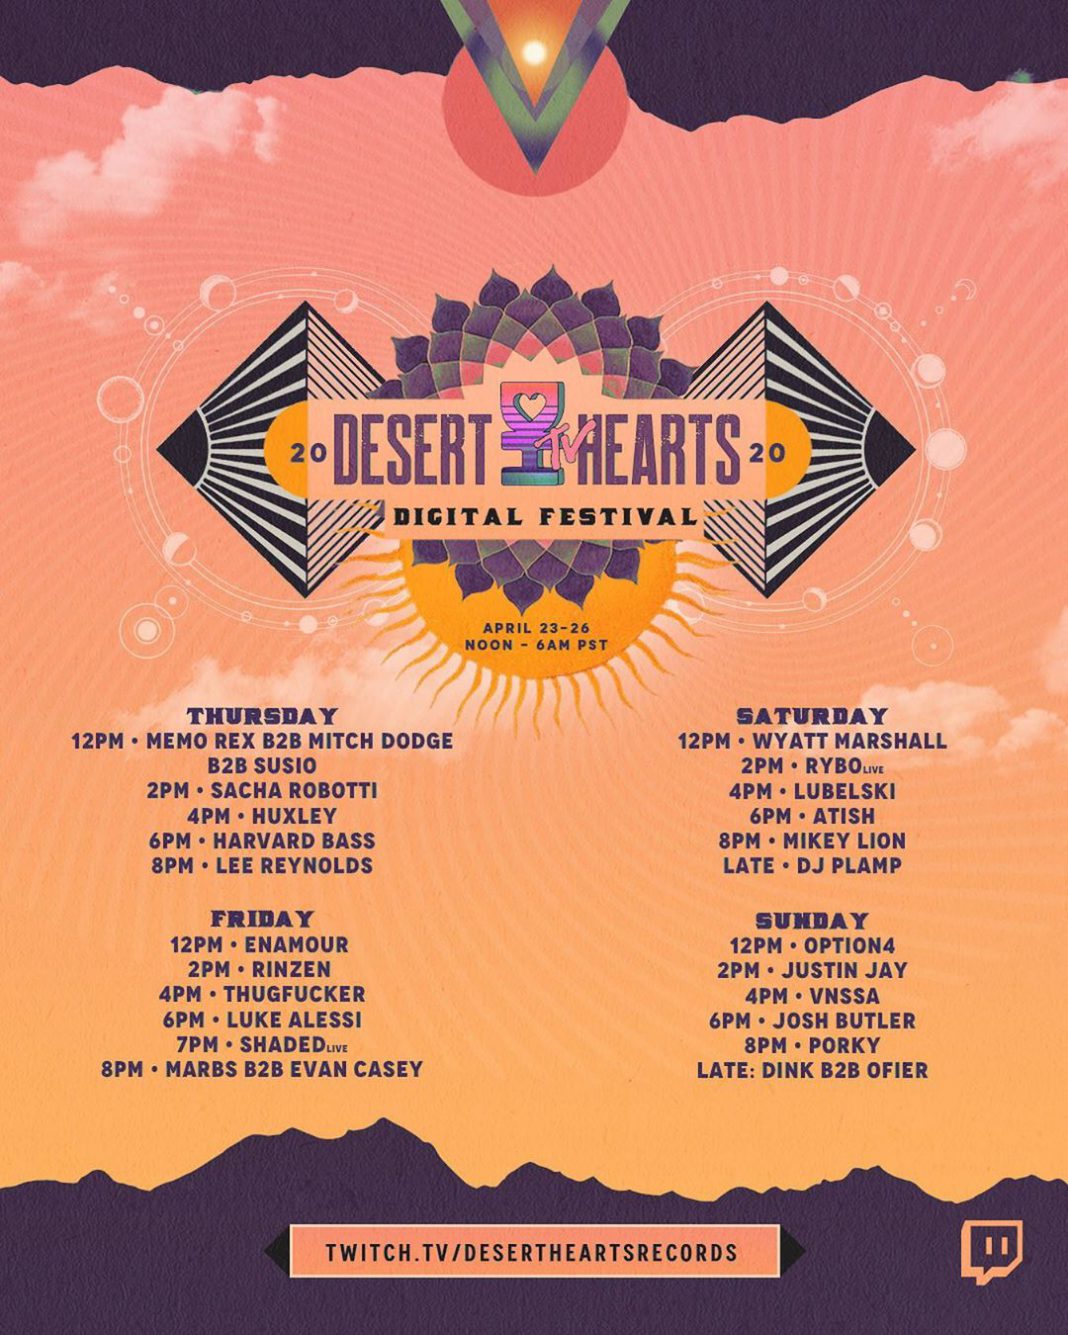 Desert Hearts Digital Festival Livestream Schedule & Info [Watch Inside